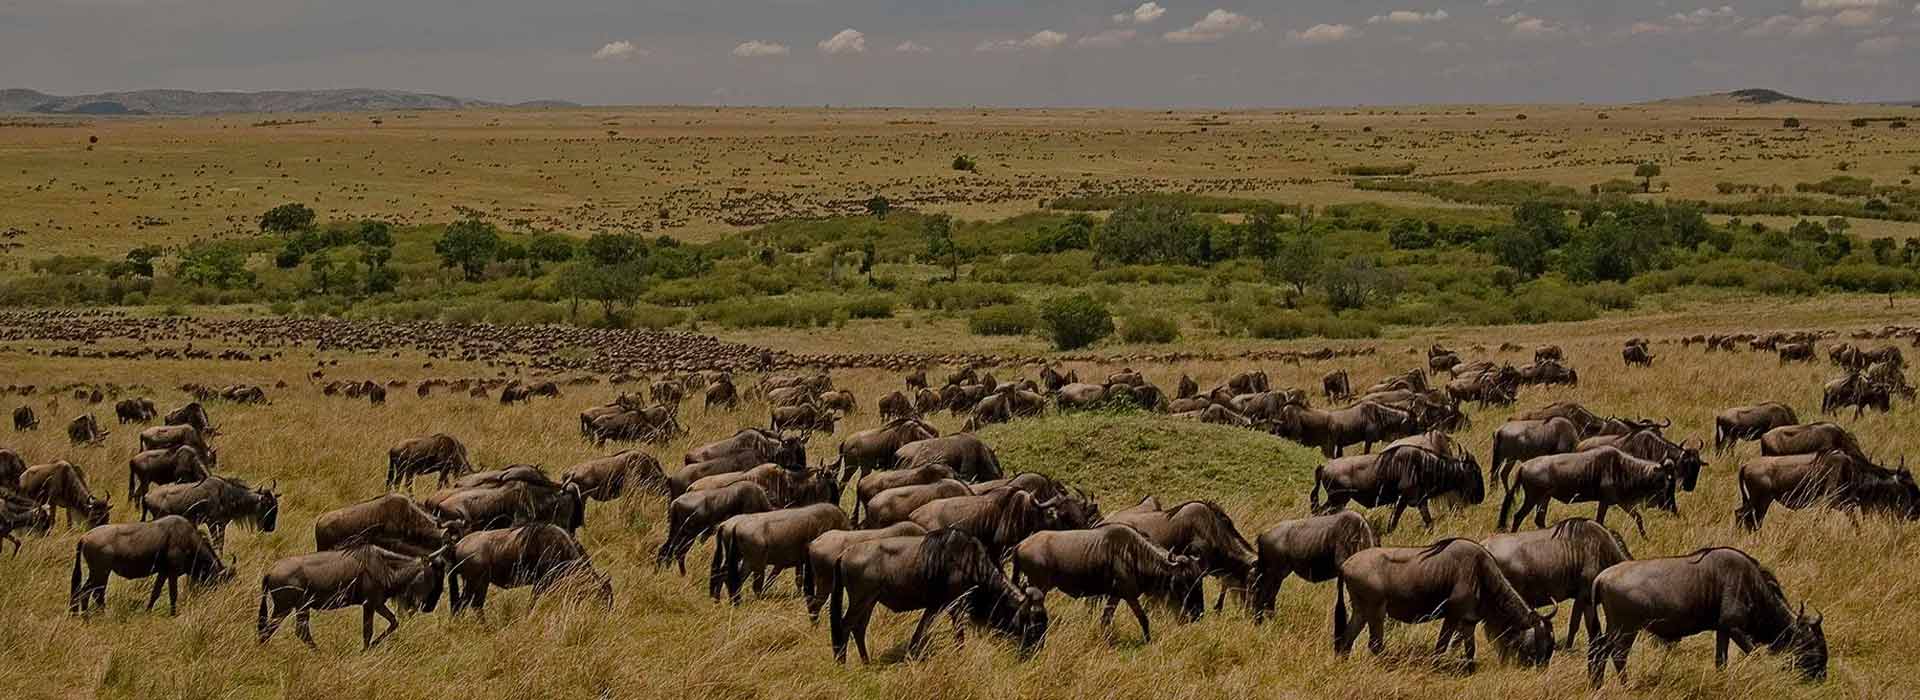 Tanzania Migration Safari Serengeti Mwanza